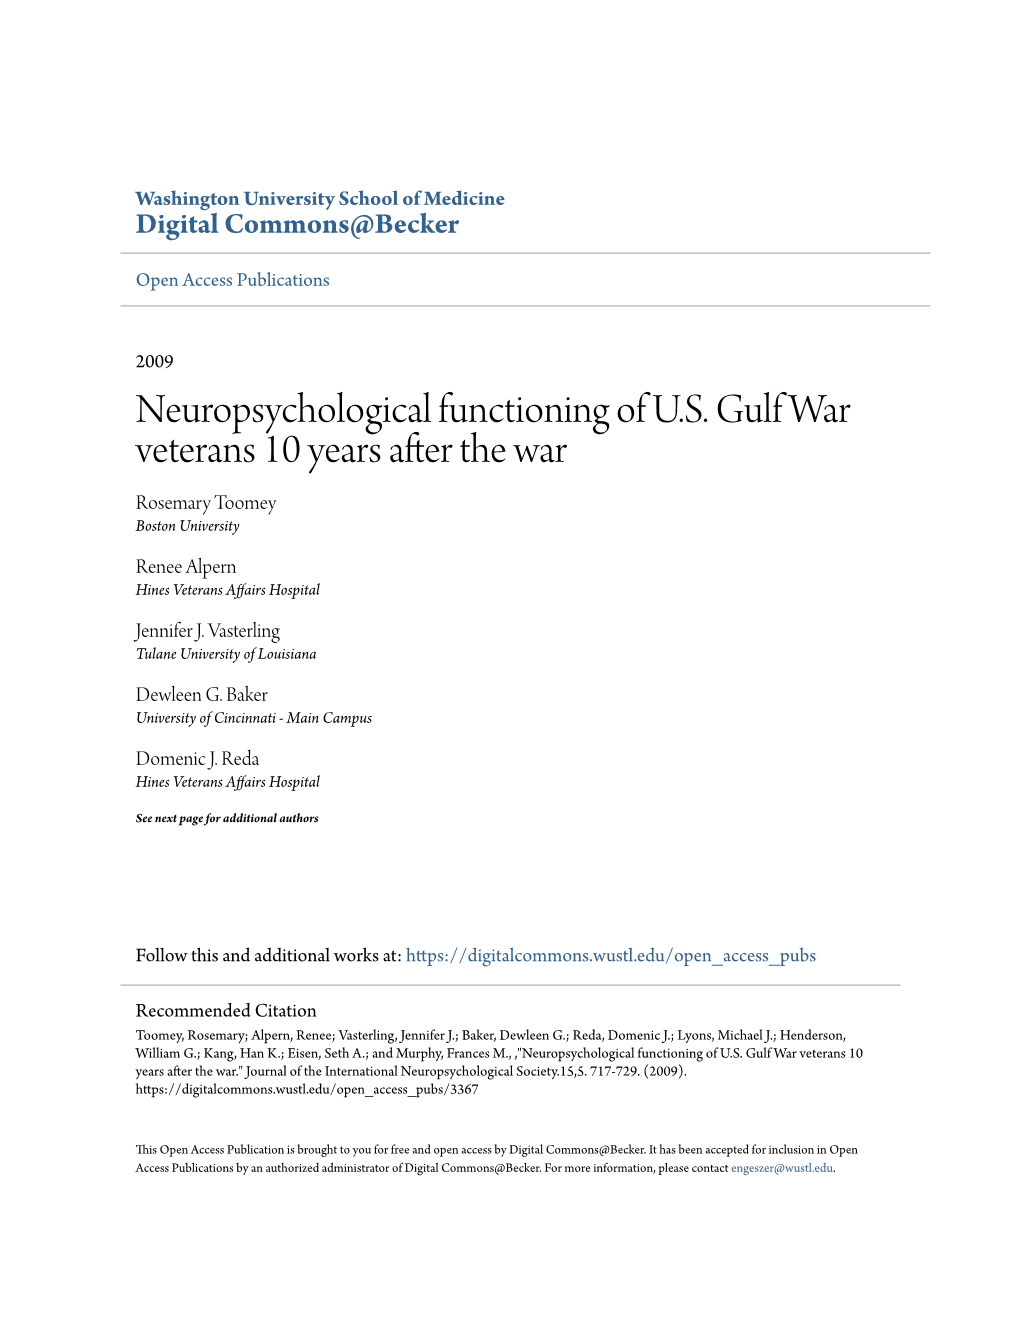 Neuropsychological Functioning of U.S. Gulf War Veterans 10 Years After the War Rosemary Toomey Boston University